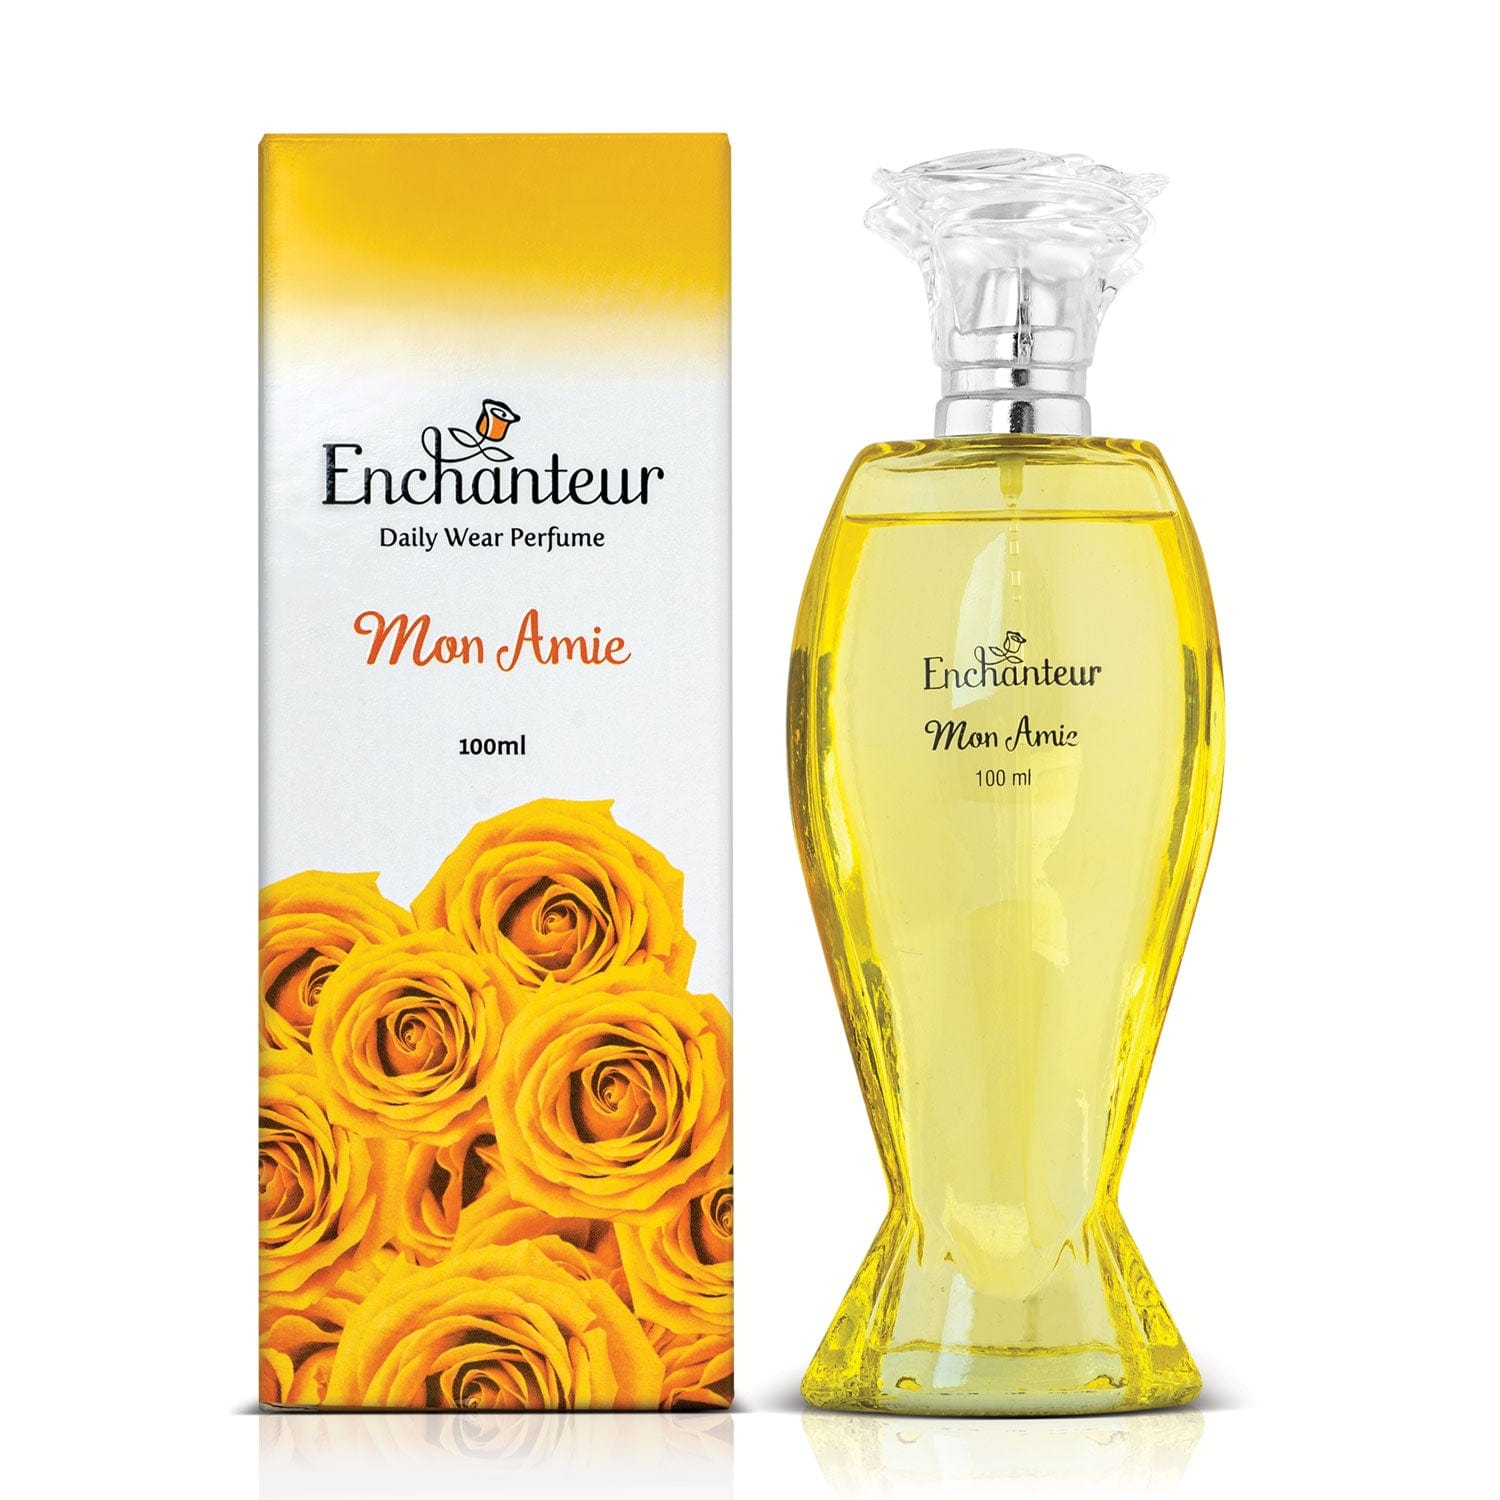 Enchanteur Mon Amie Daily wear Perfume for Women, 100ml By Enchanteur